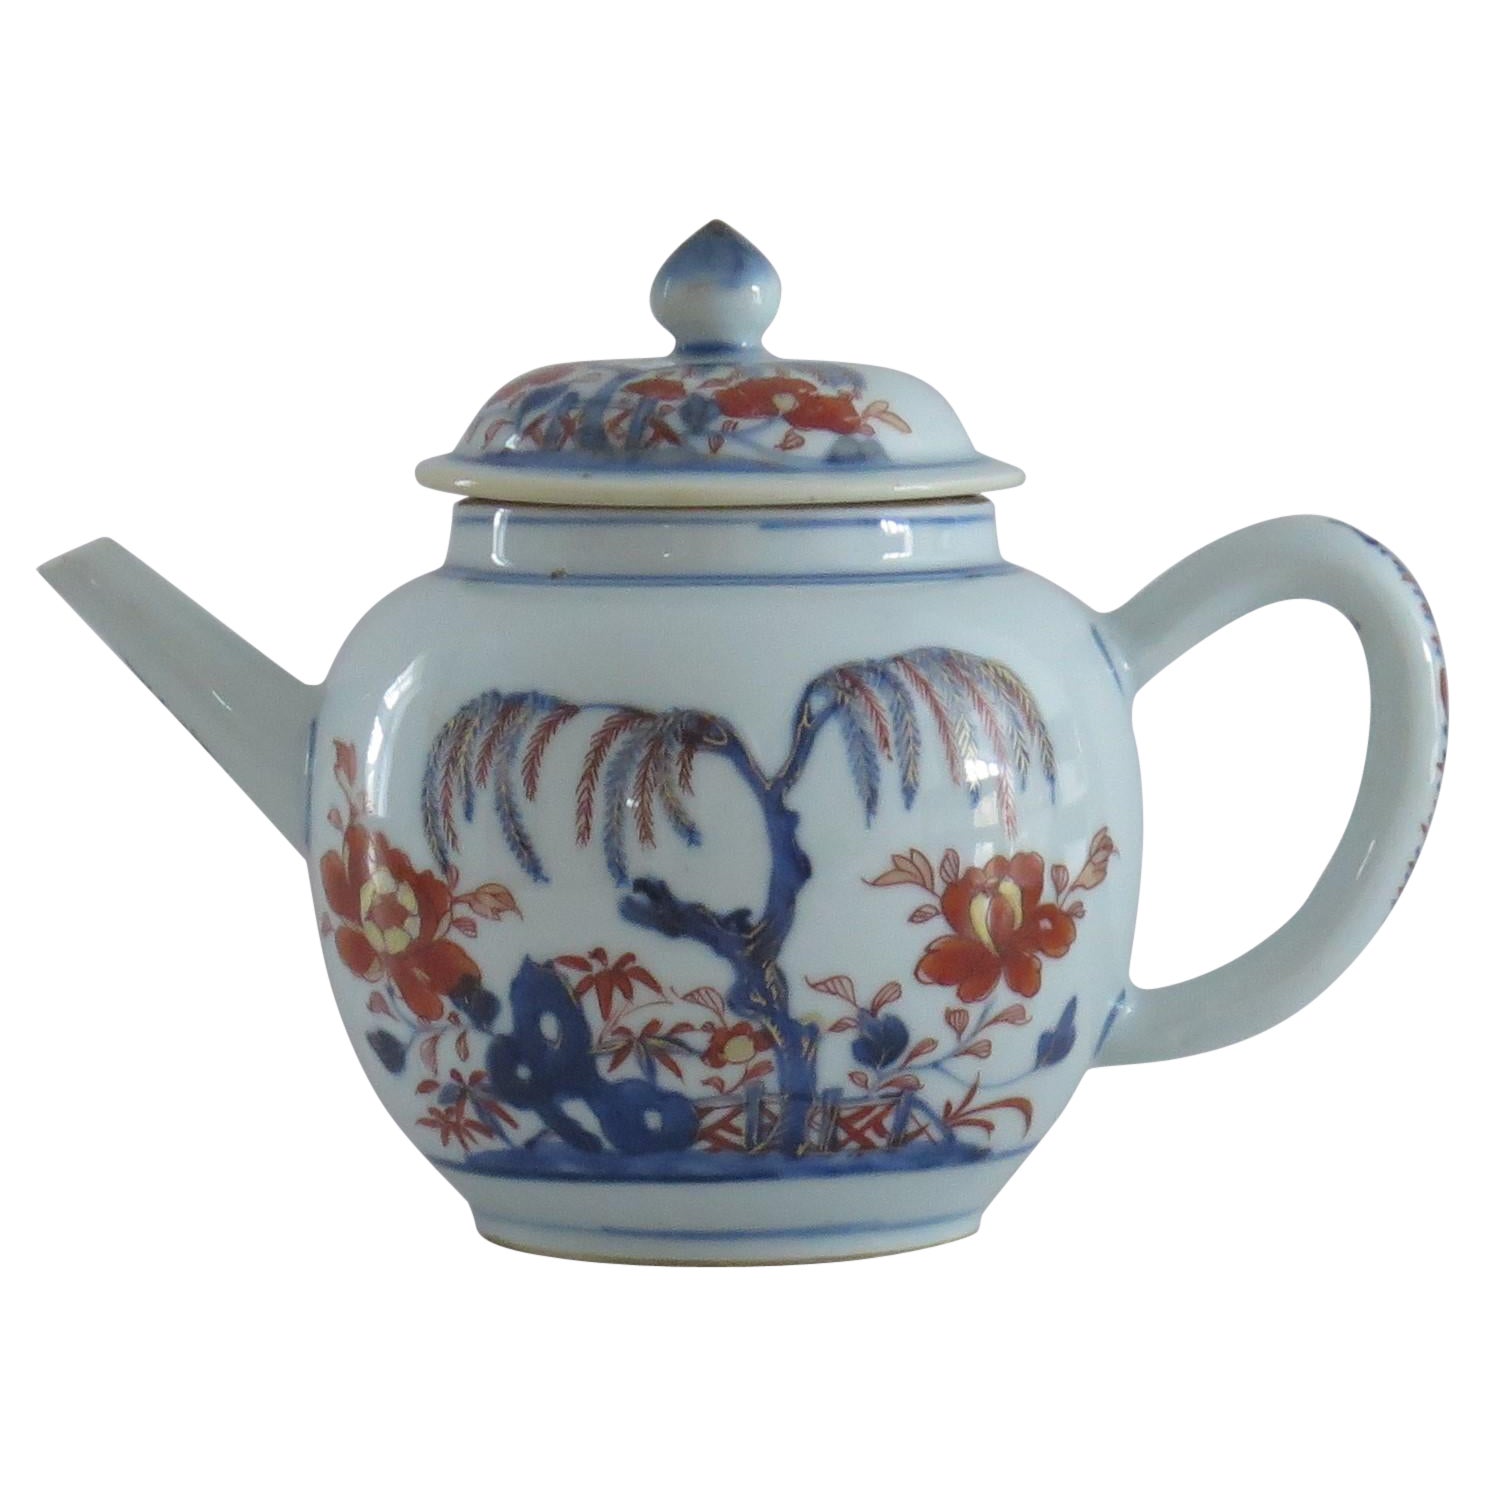 Chinese Export Kangxi Period Teapot Hand Painted Imari Pattern, Circa 1710